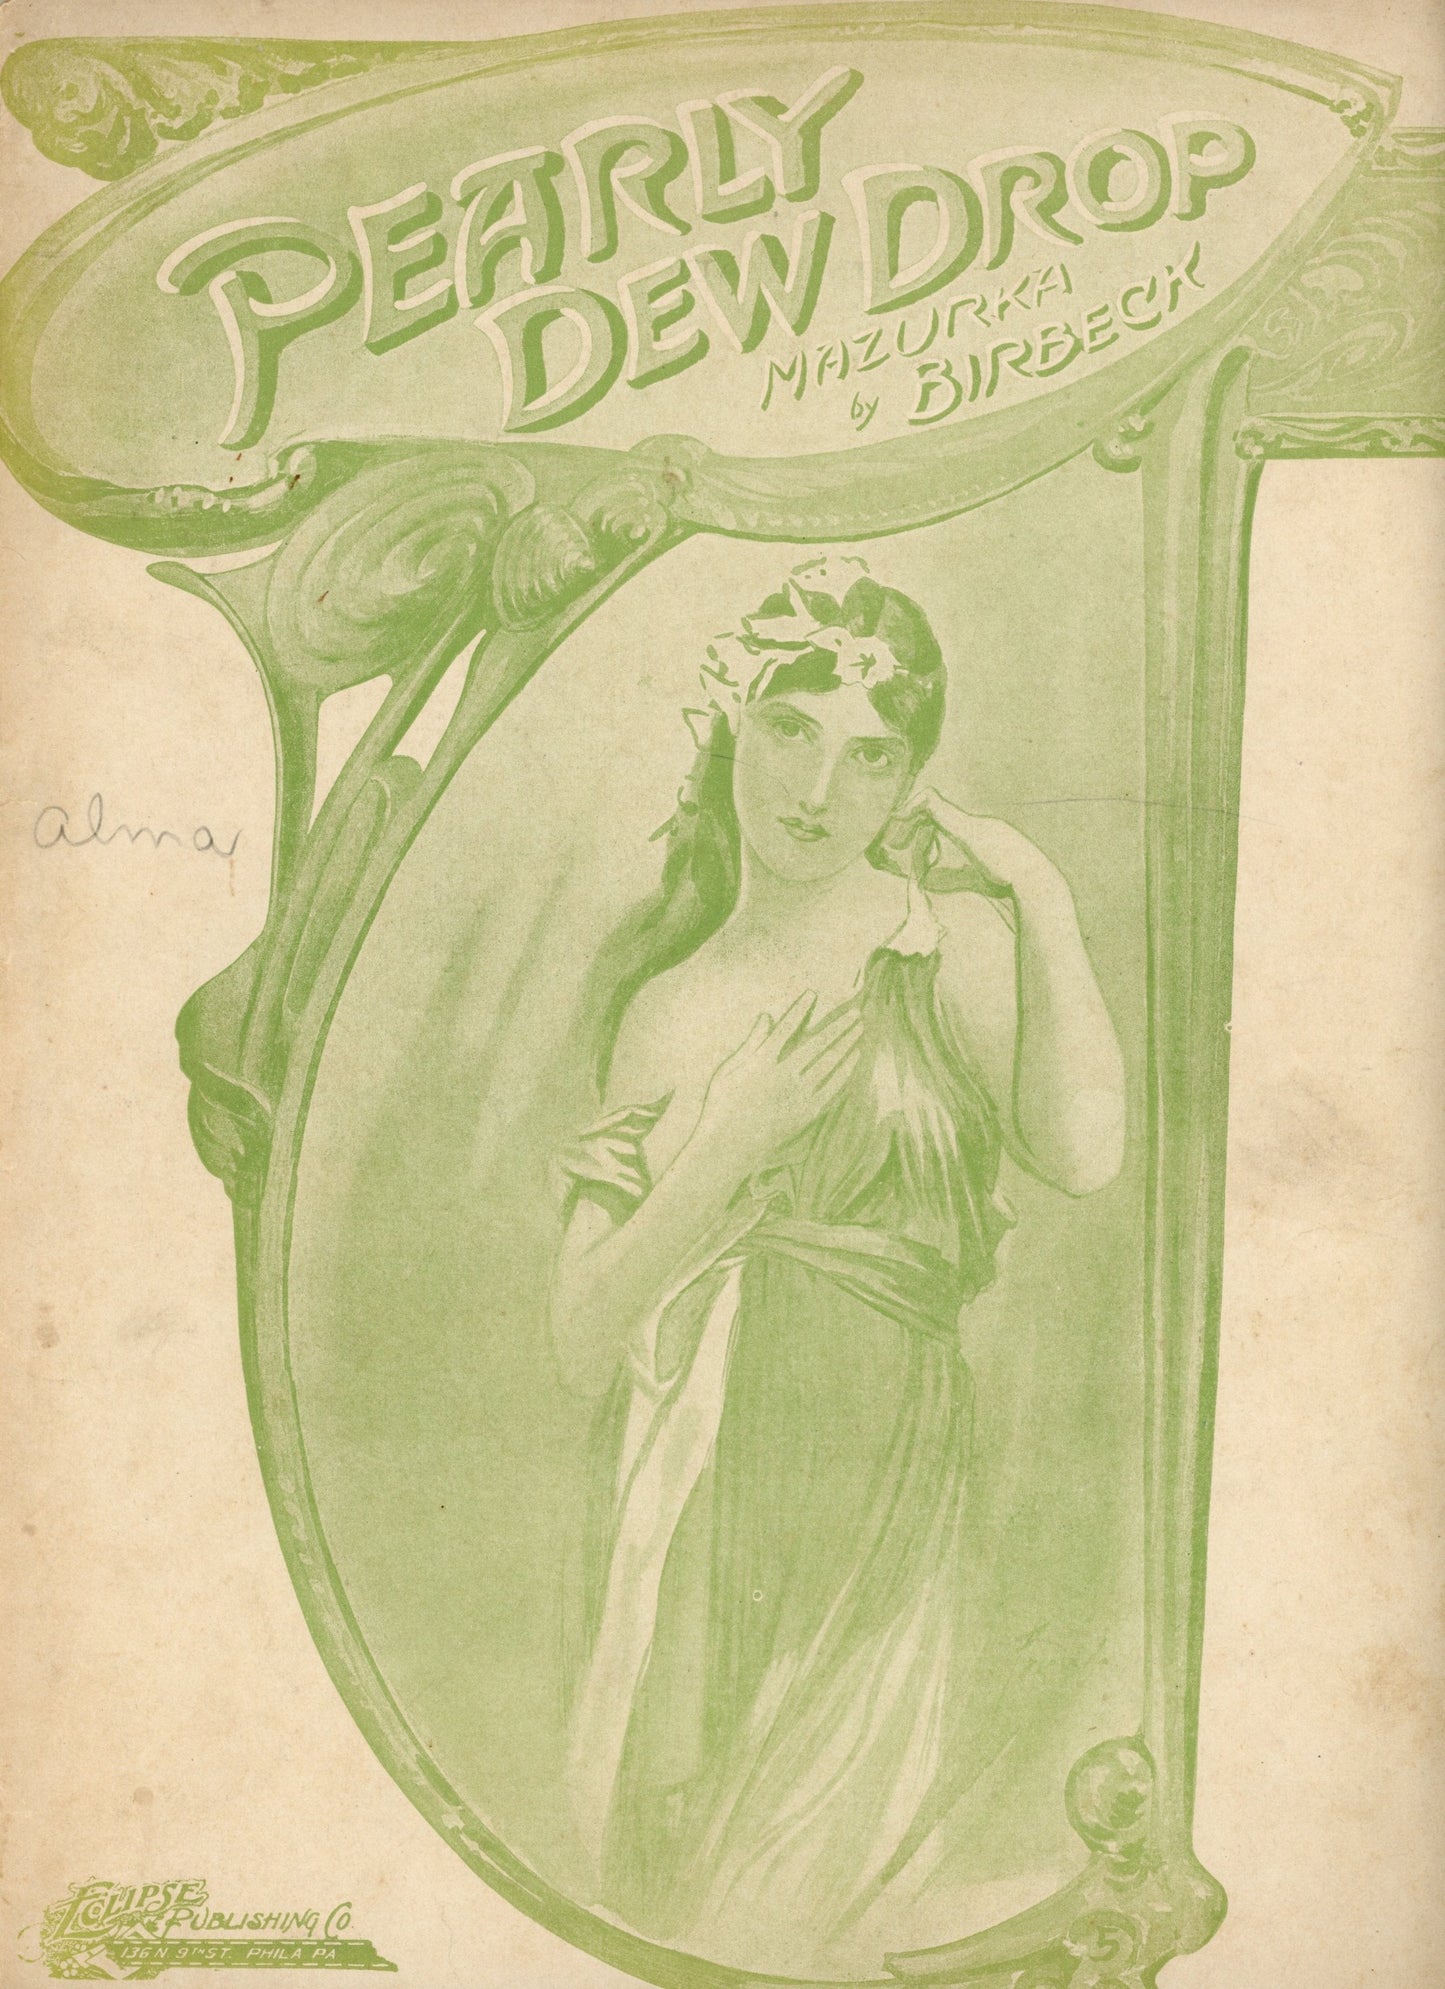 PEARLY DEWDROP Mazurka de Salon Sheet Music ©1897 by S. McIntyre Birbeck